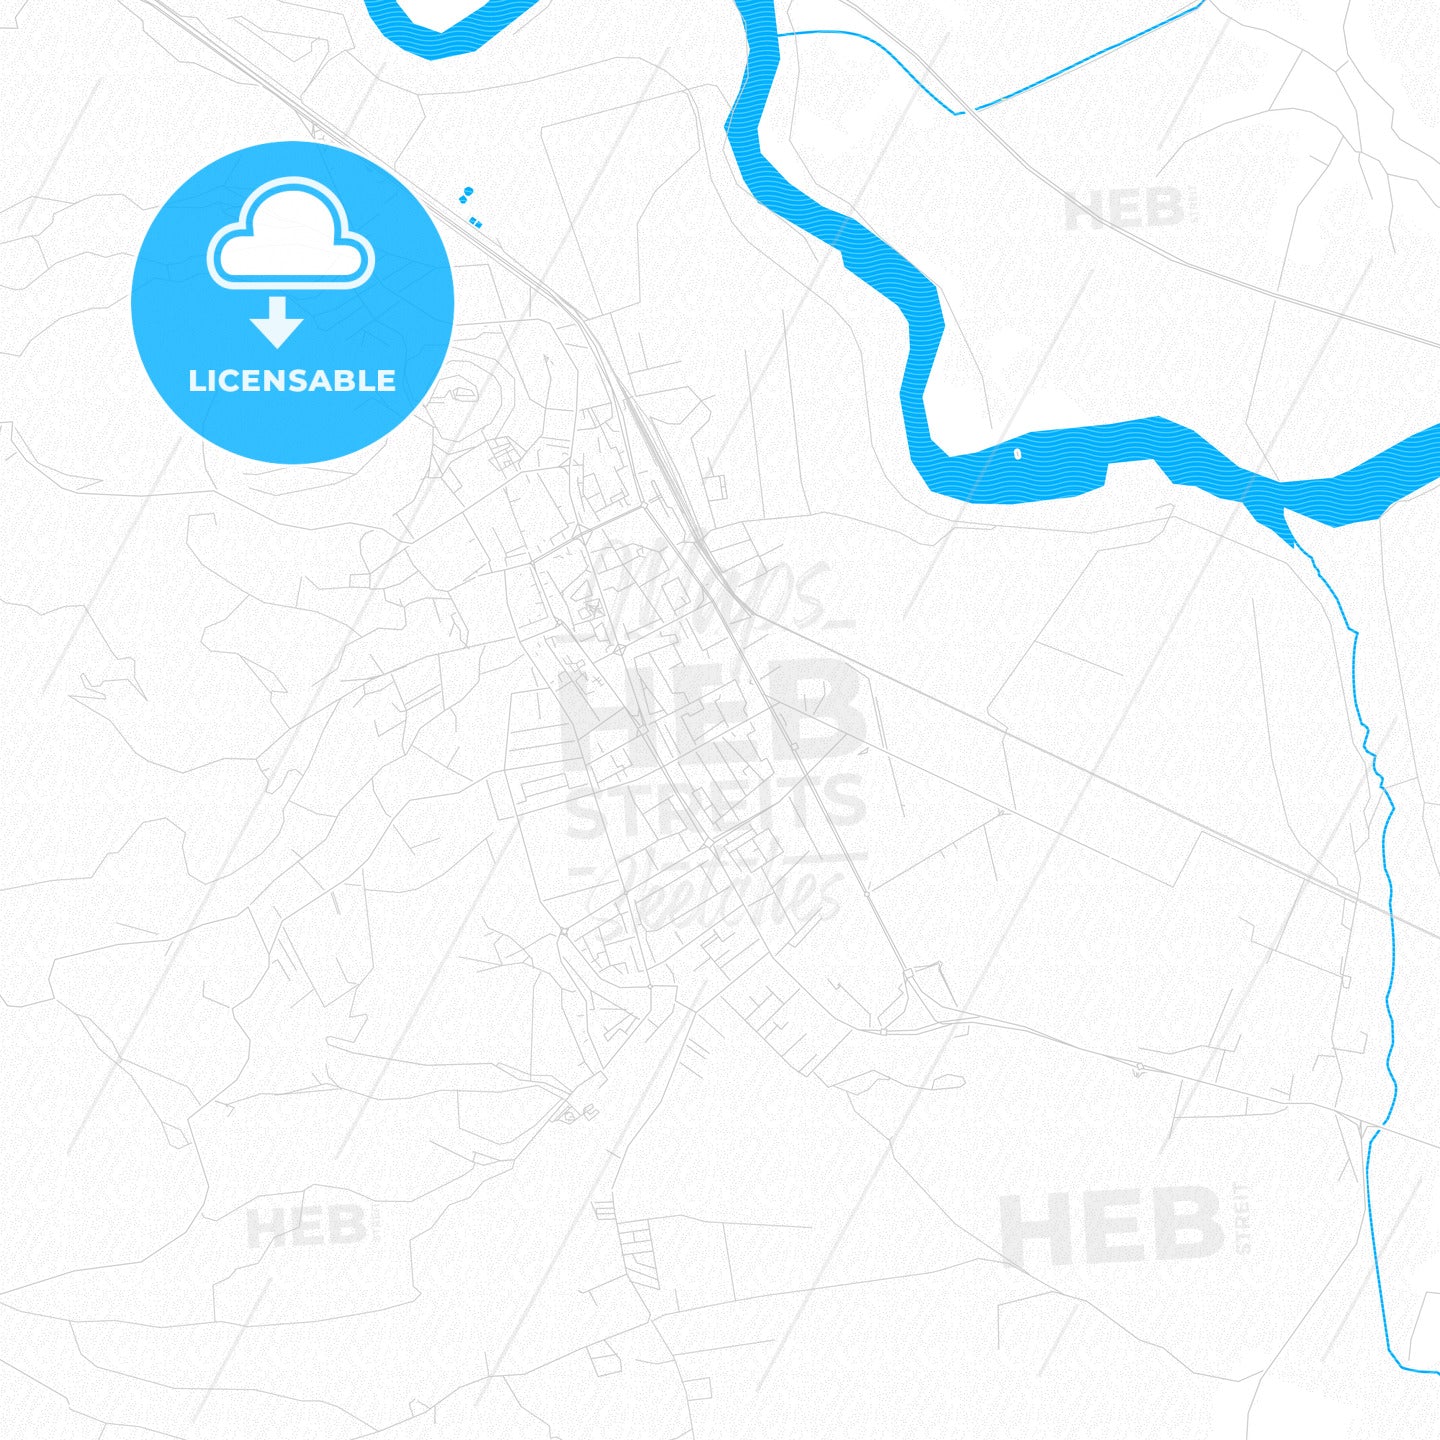 Deva, Romania PDF vector map with water in focus